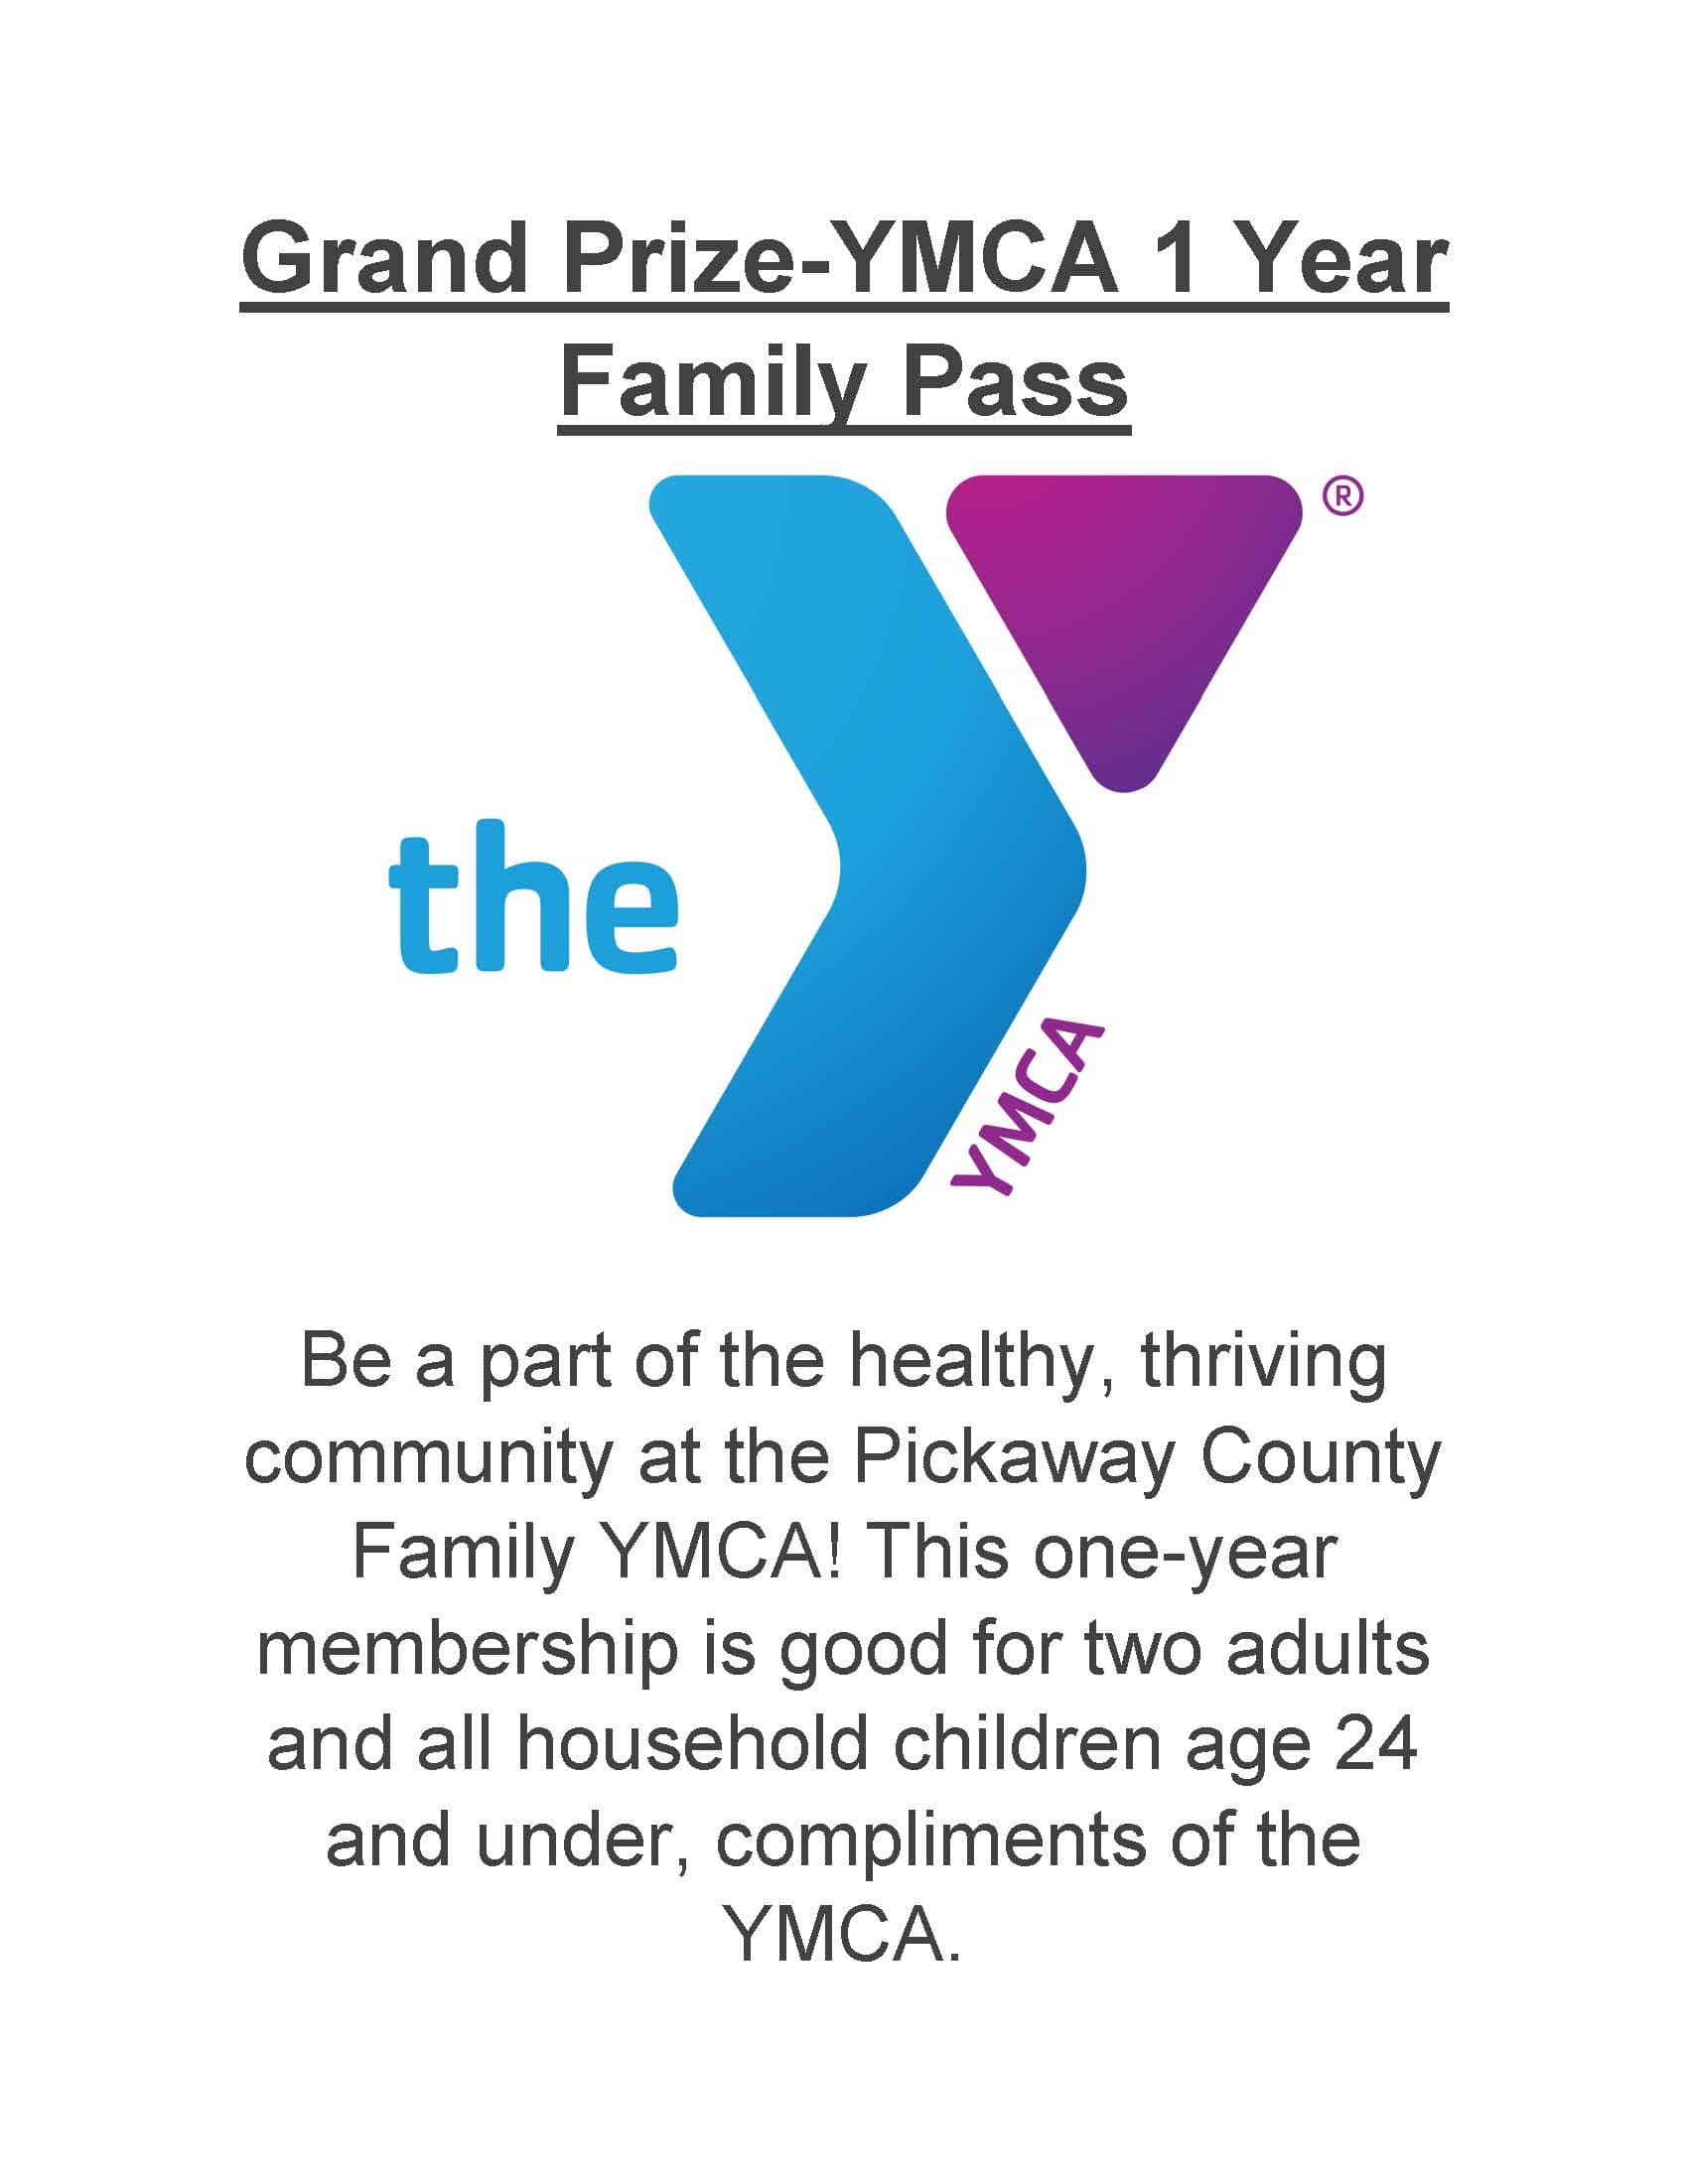 Summer Reading grand prize option YMCA membership